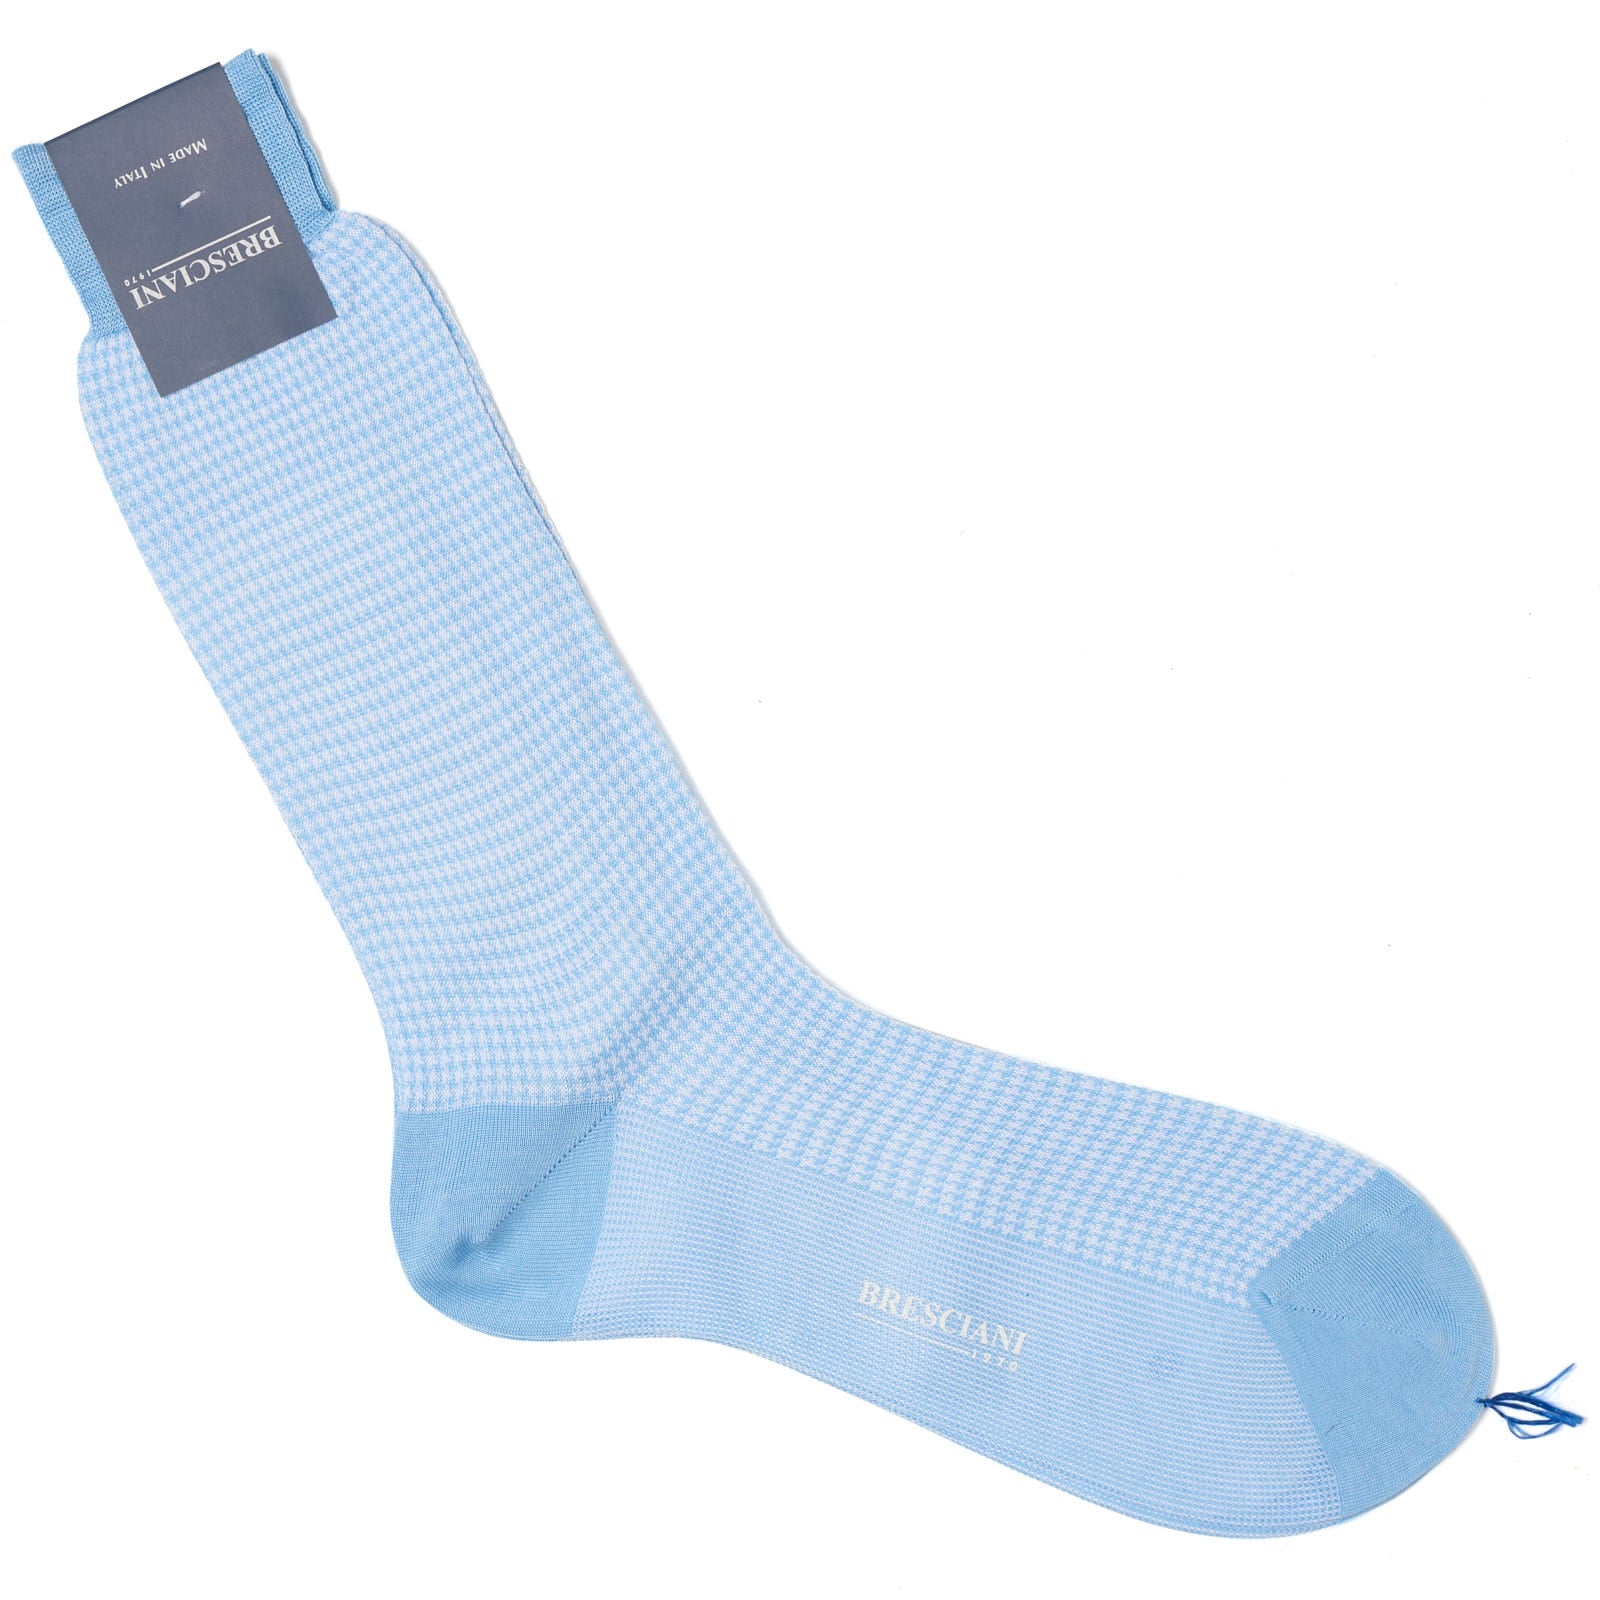 BRESCIANI Cotton Geometry Macro-Design Mid Calf Length Socks US M-L